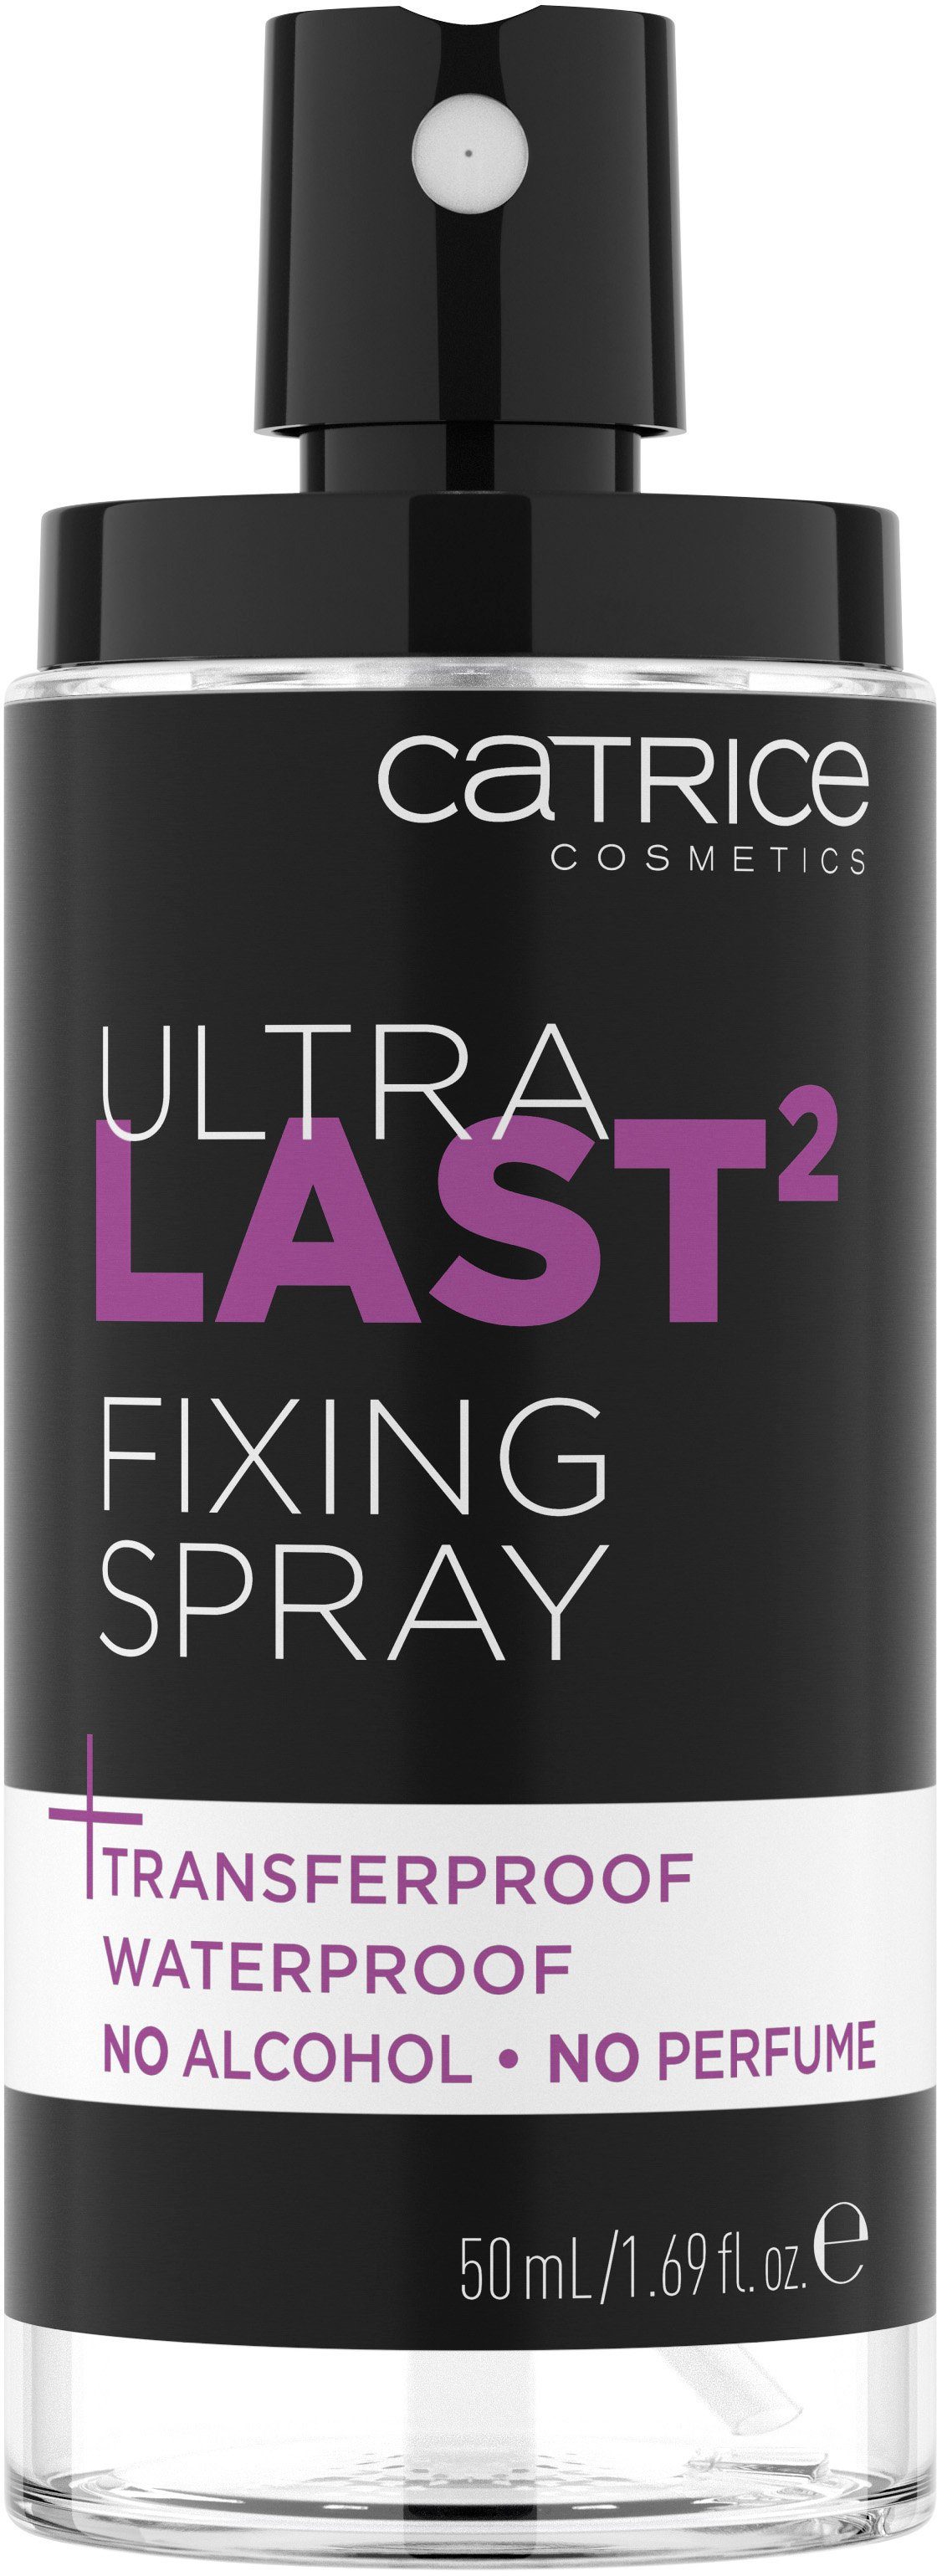 Last2 3-tlg. Fixierspray Ultra Fixing Catrice Spray,